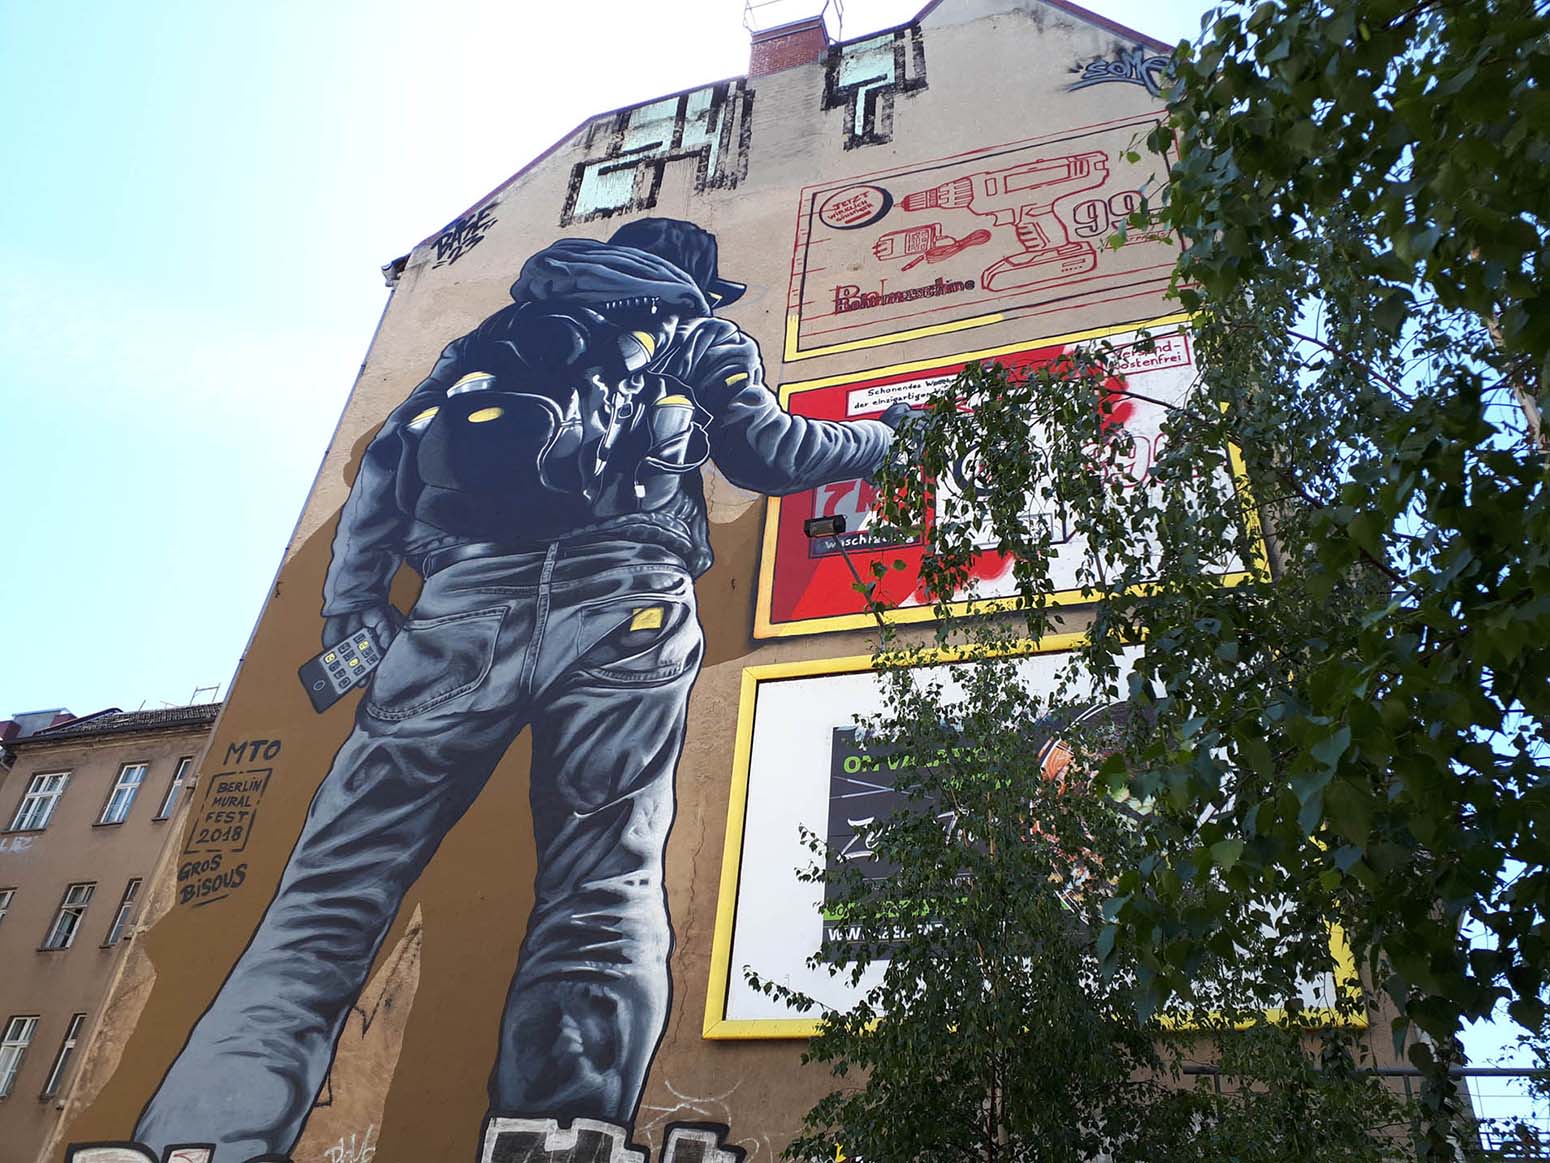 Berlino Street art tour